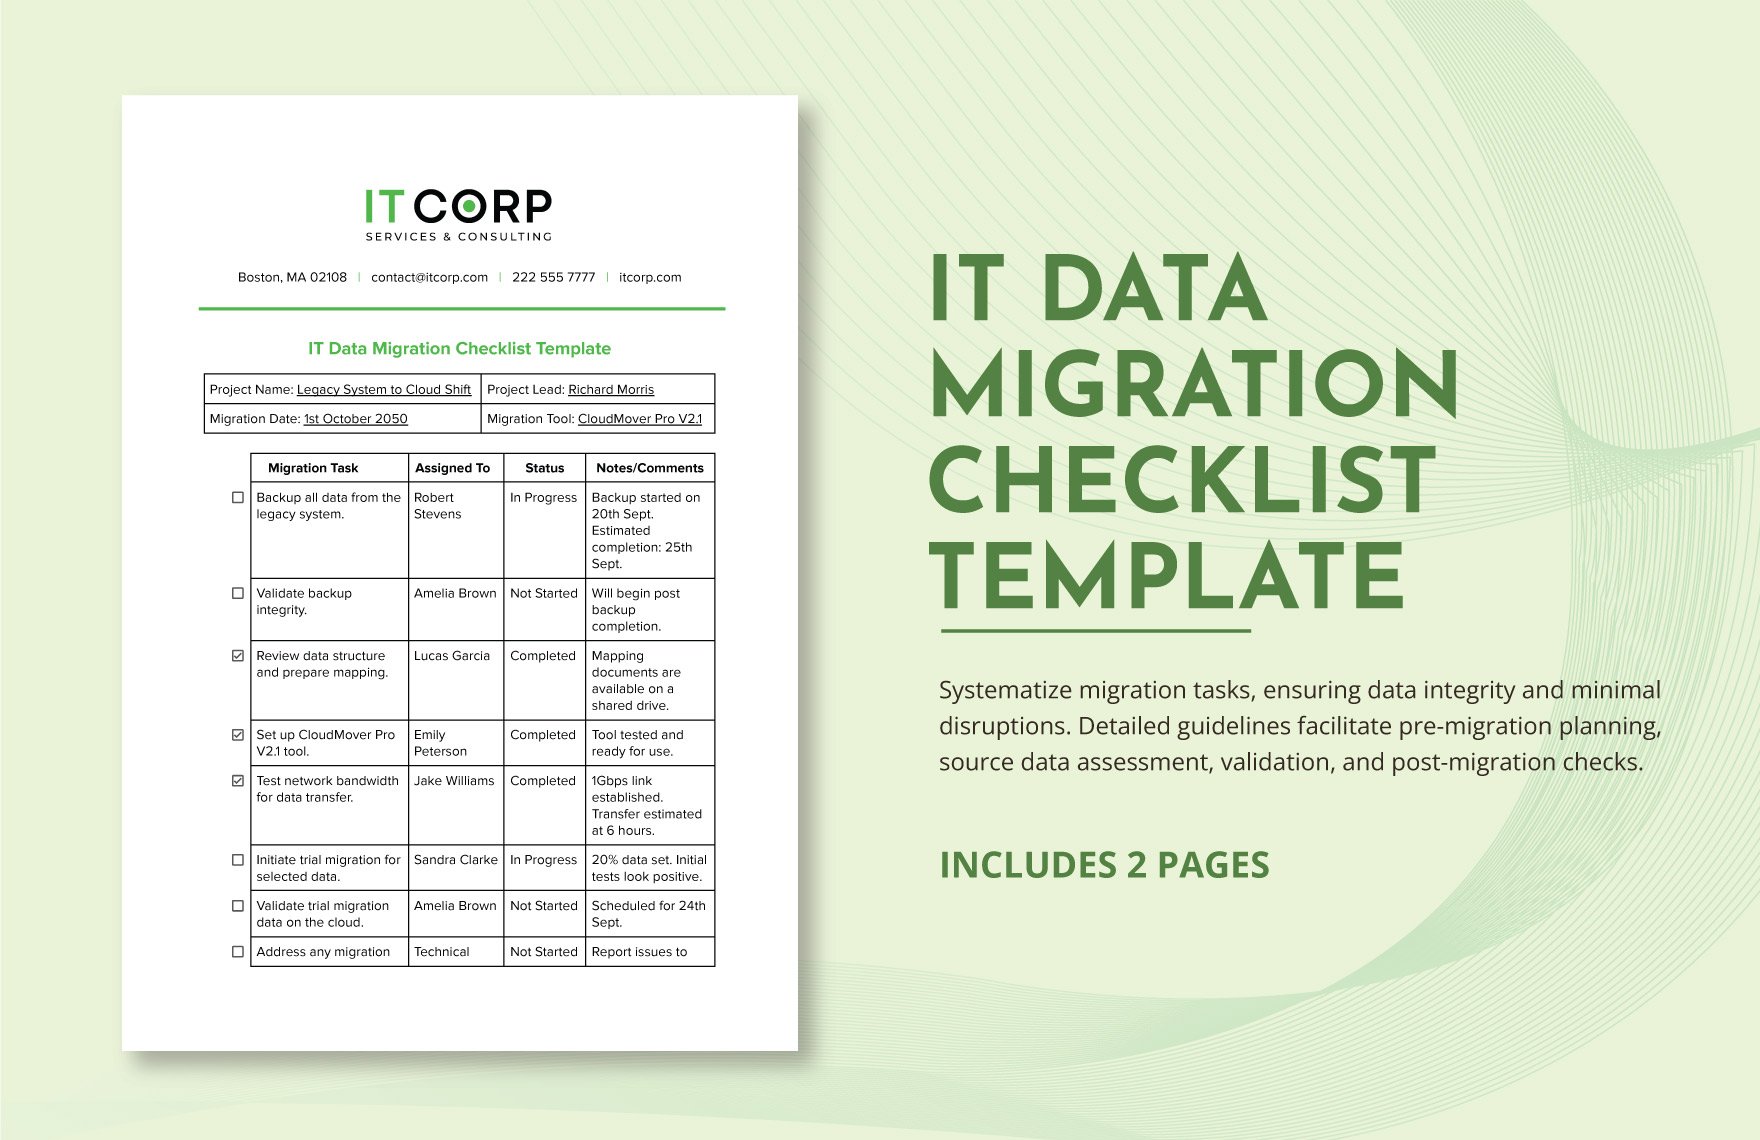 IT Data Migration Checklist Template